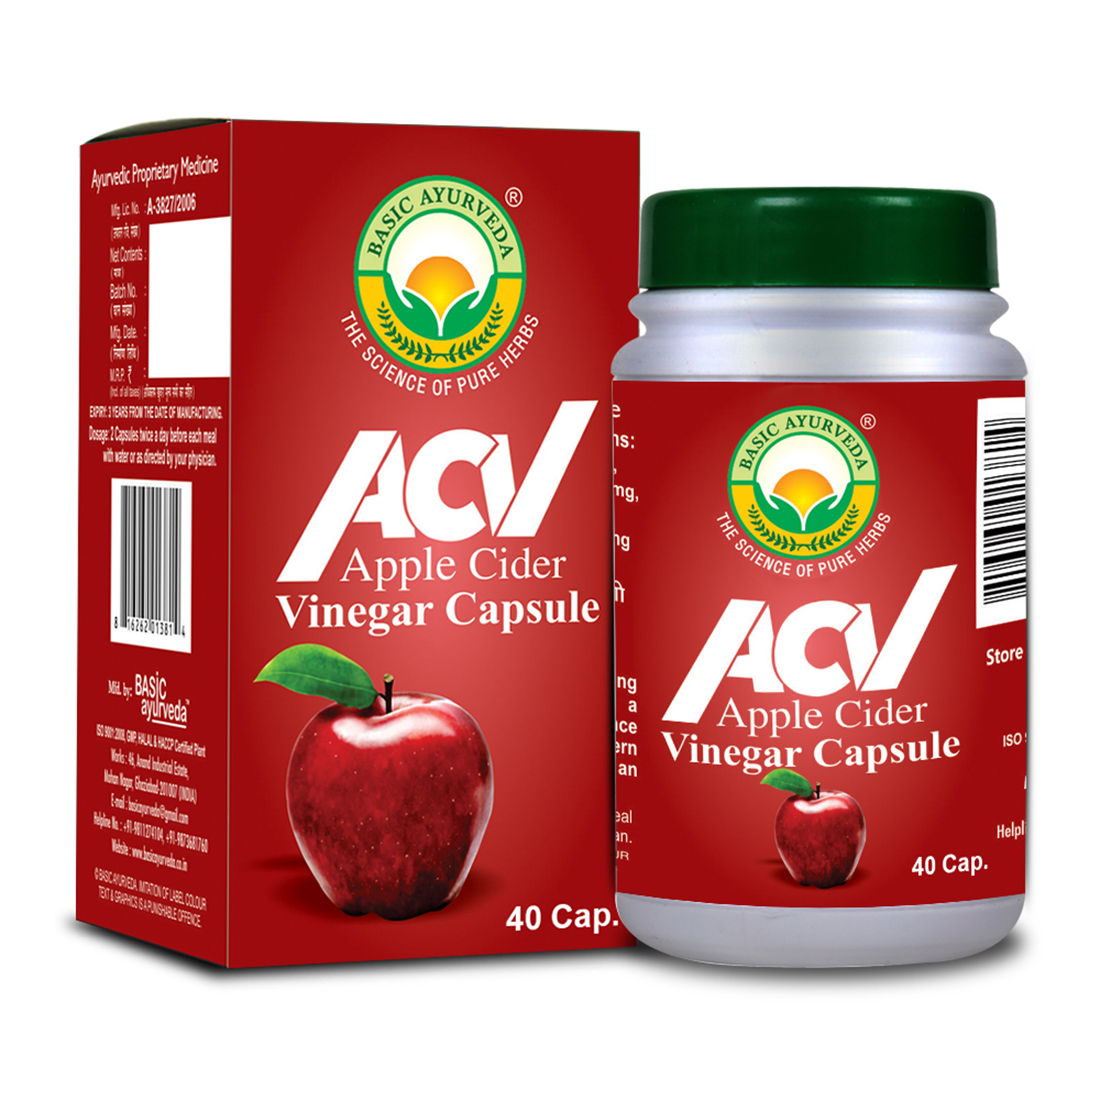 (ACV) Apple Cider Vinegar Capsule